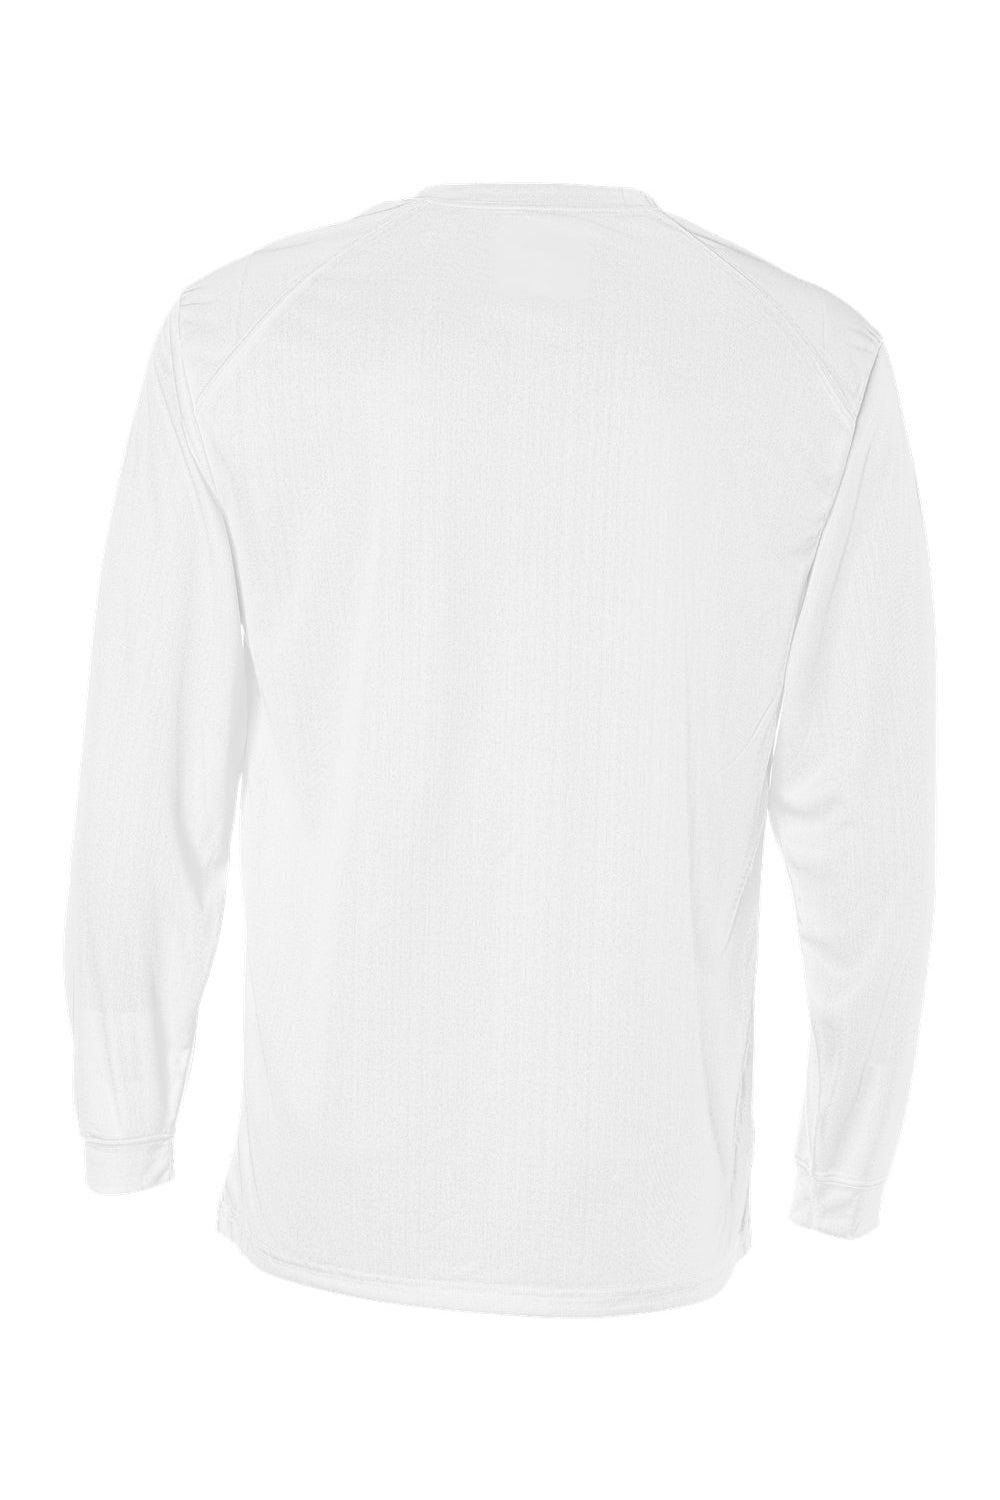 Badger 4104 Mens B-Core Moisture Wicking Long Sleeve Crewneck T-Shirt White Flat Back